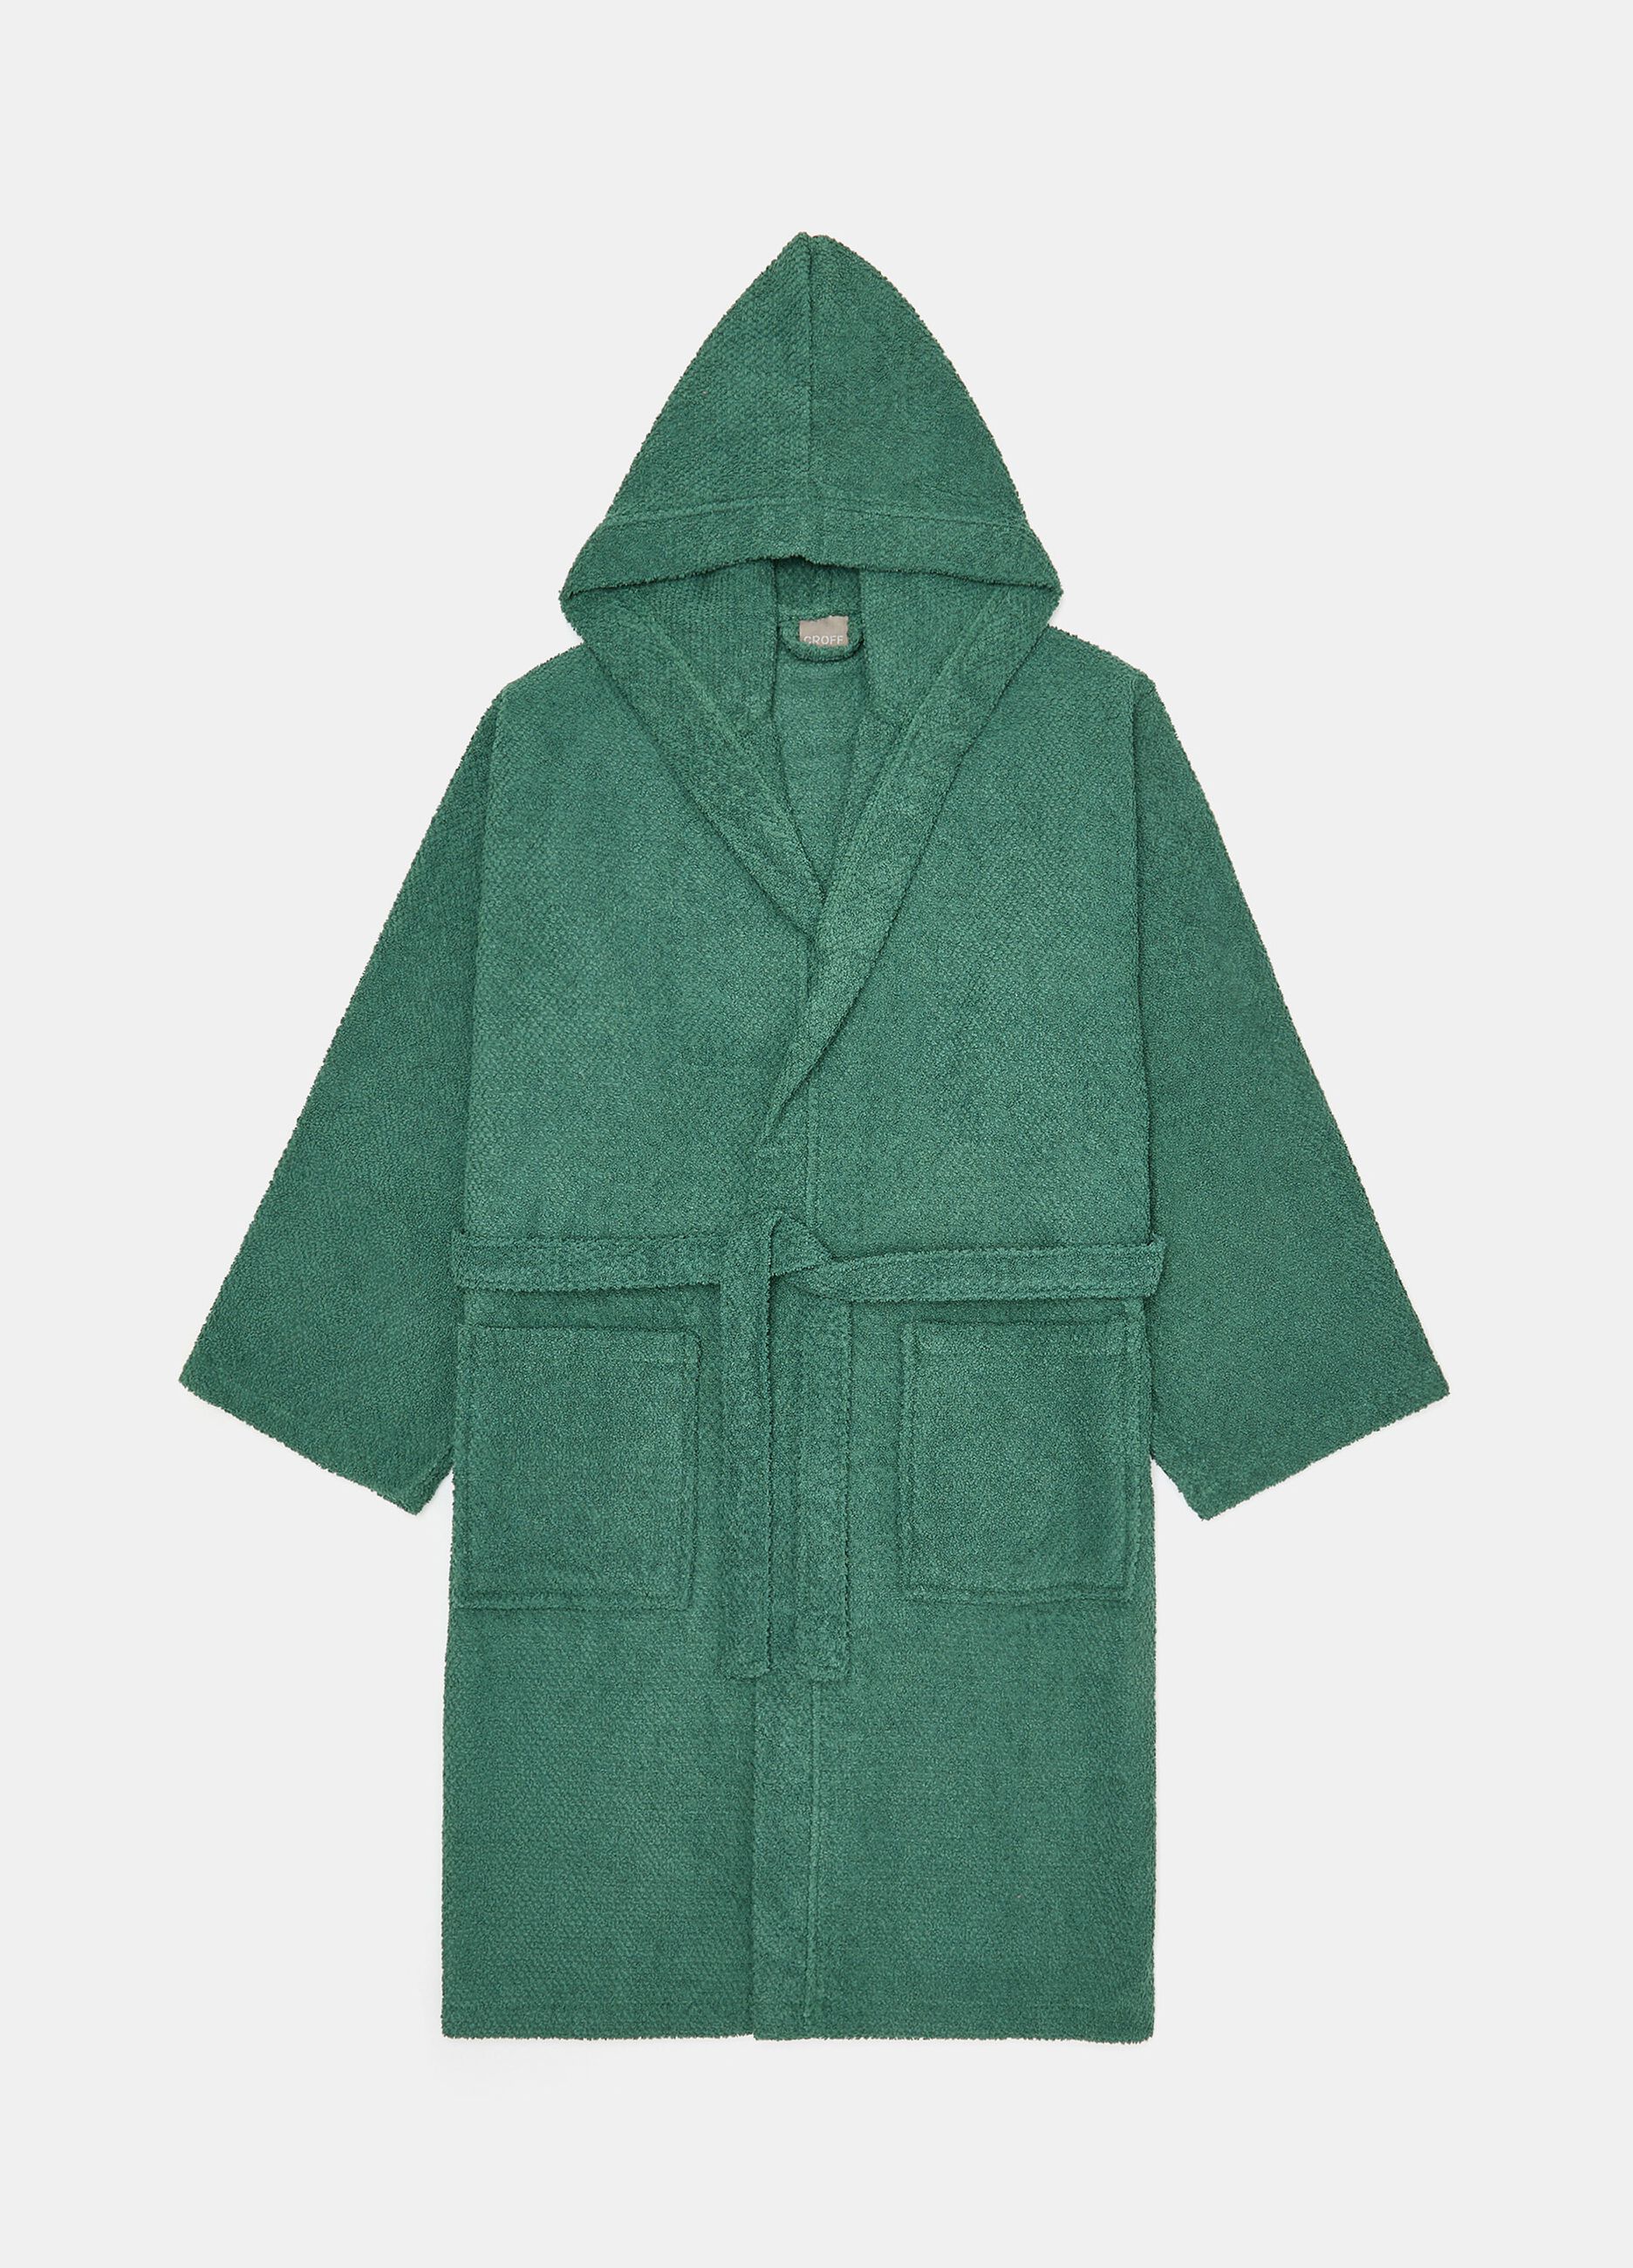 100% cotton terry bathrobe